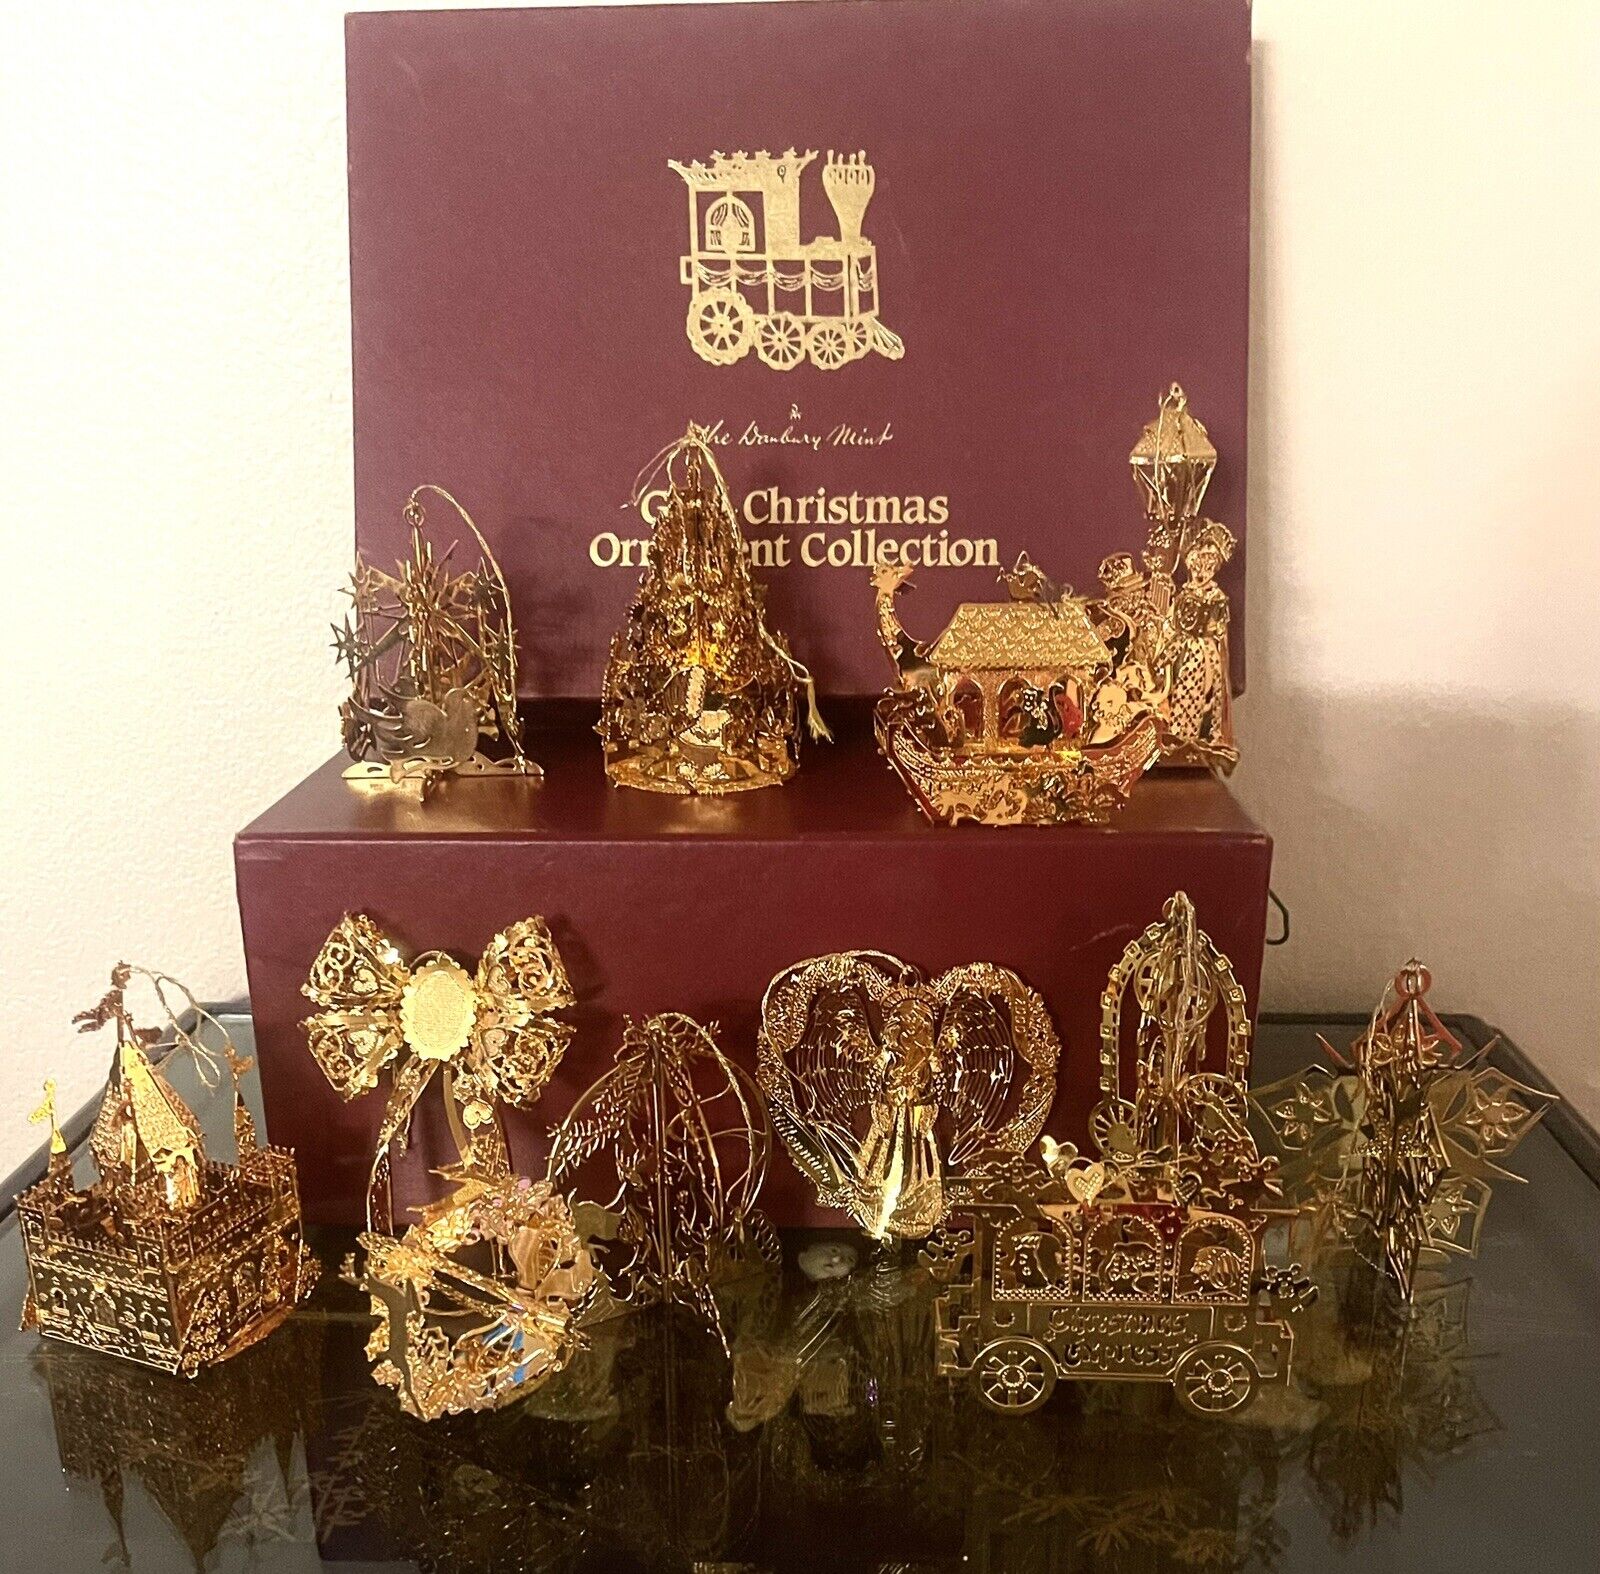 DM-01 - Danbury Mint Gold Christmas Ornament Collection / Lot of 12